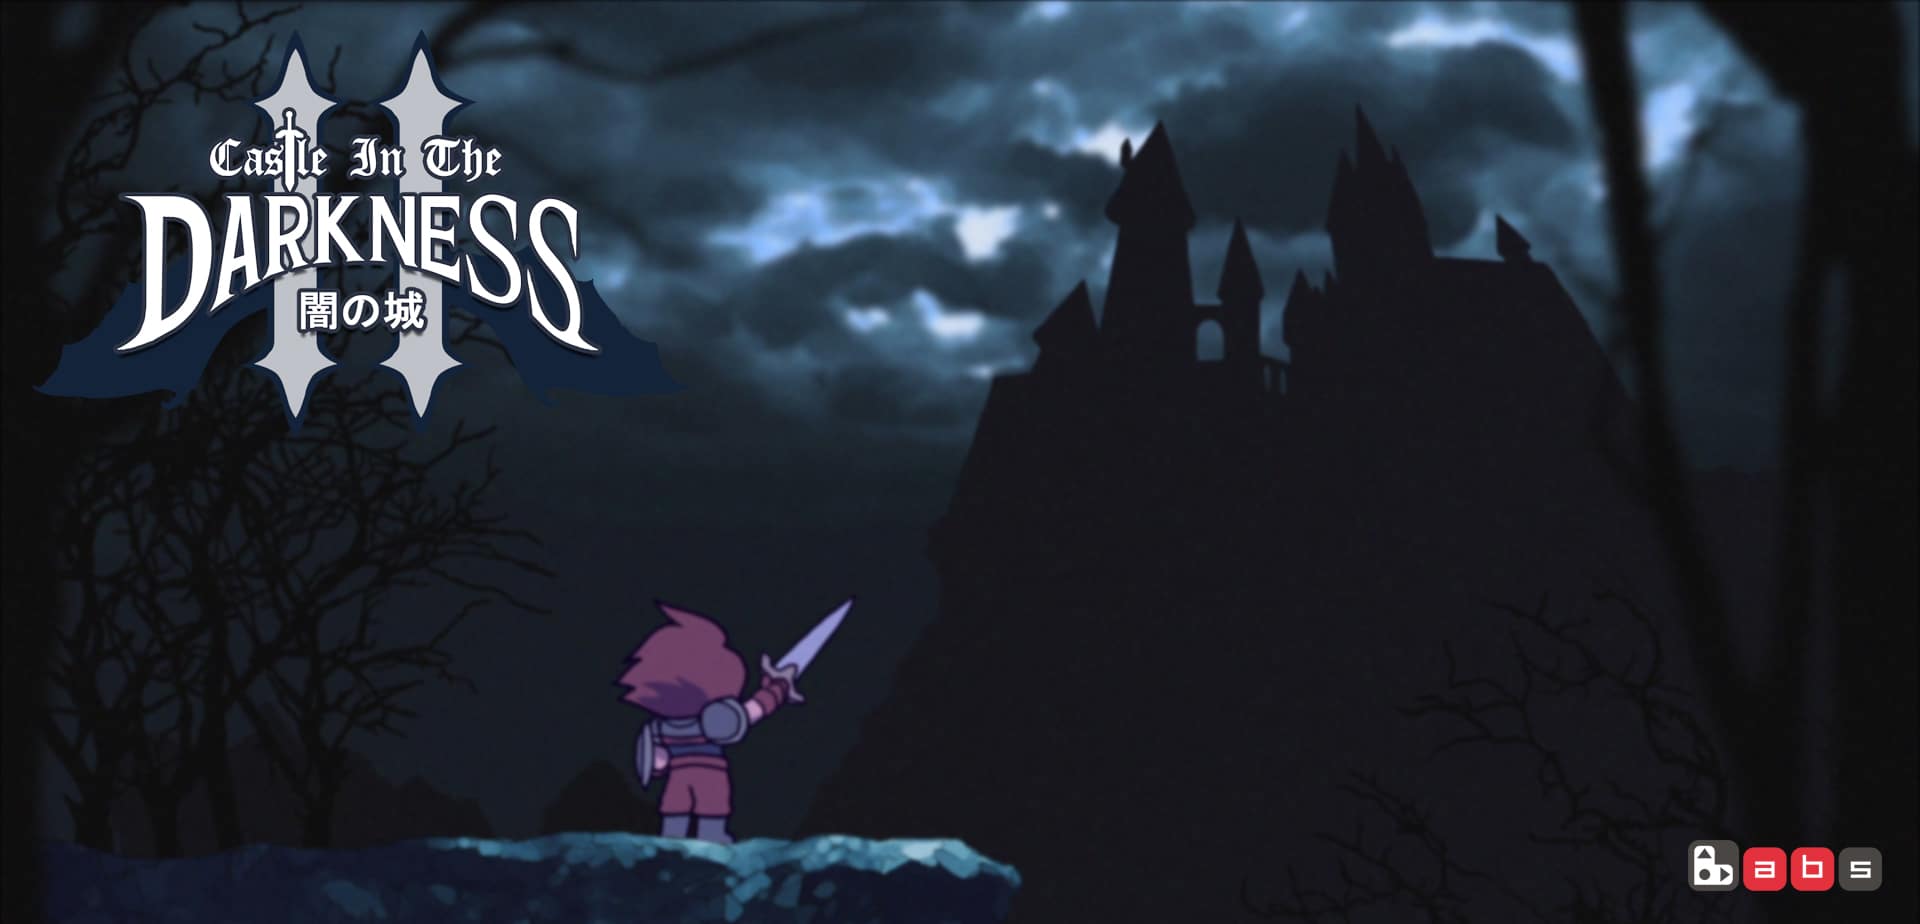 L'RPG in stile pixel art Castle in the Darkness II annunciato per PC 2